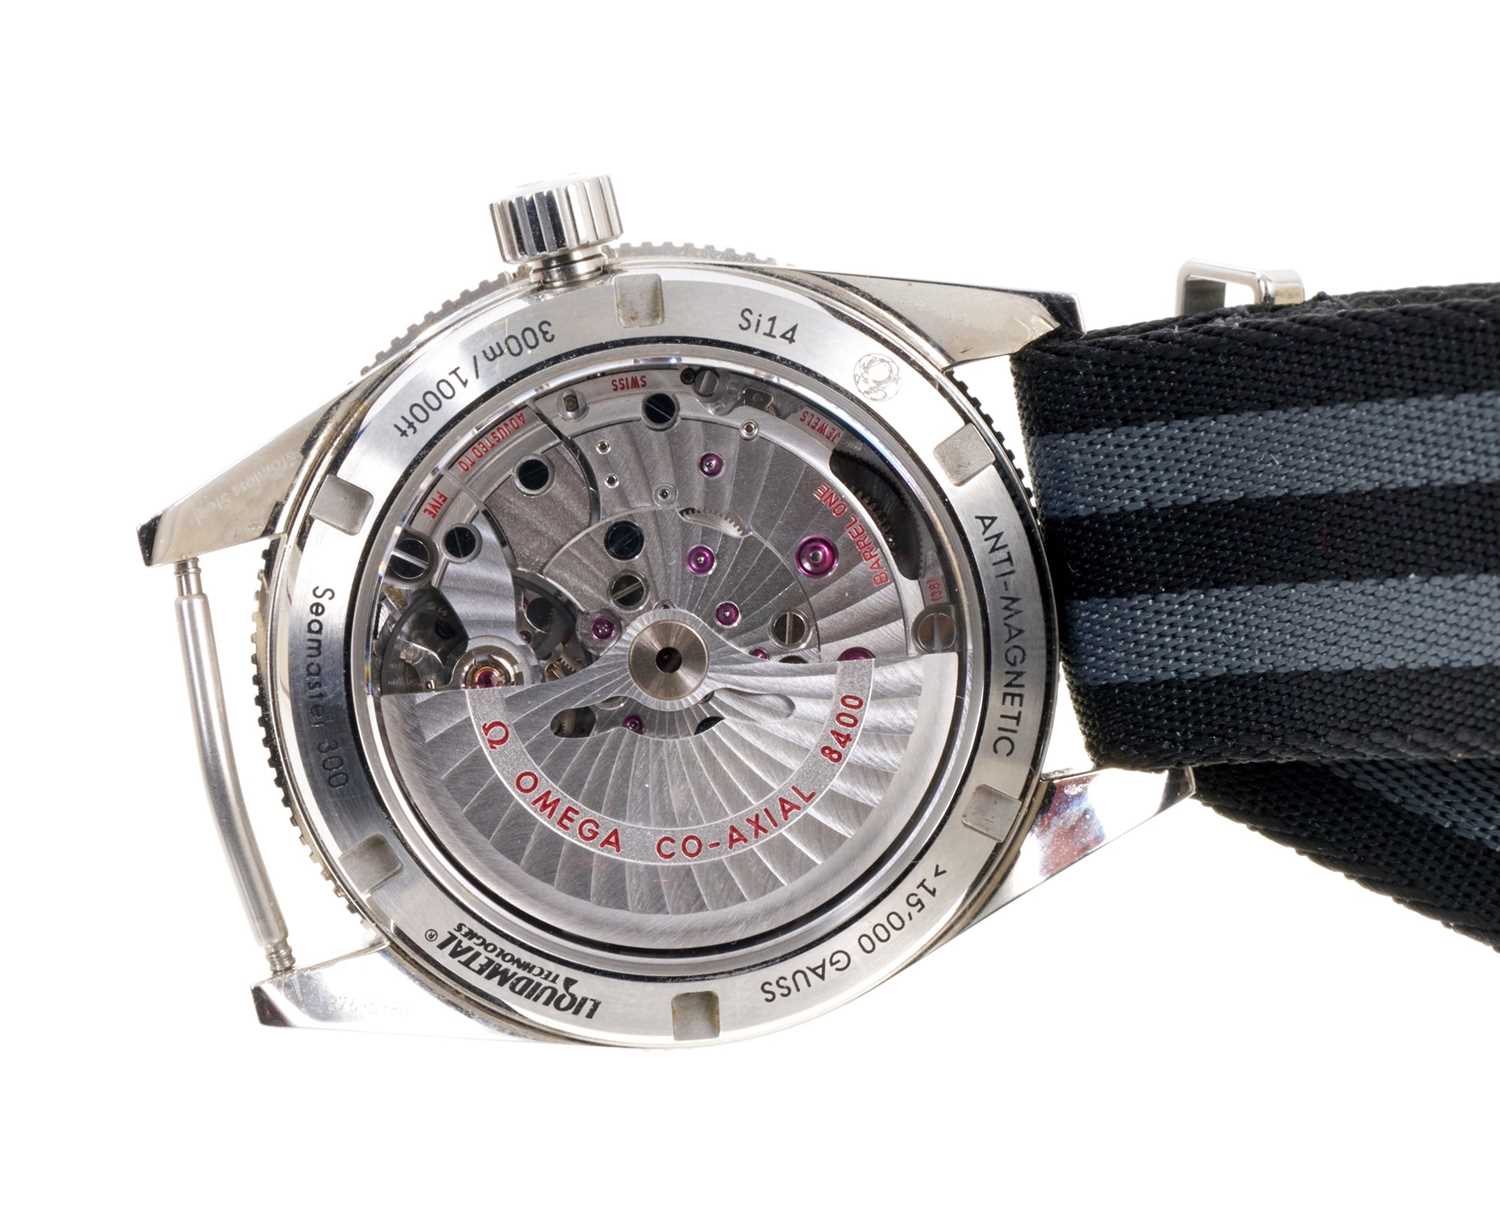 Fine Gentlemen’s modern Omega Seamaster wristwatch in box with certificate - Image 5 of 6